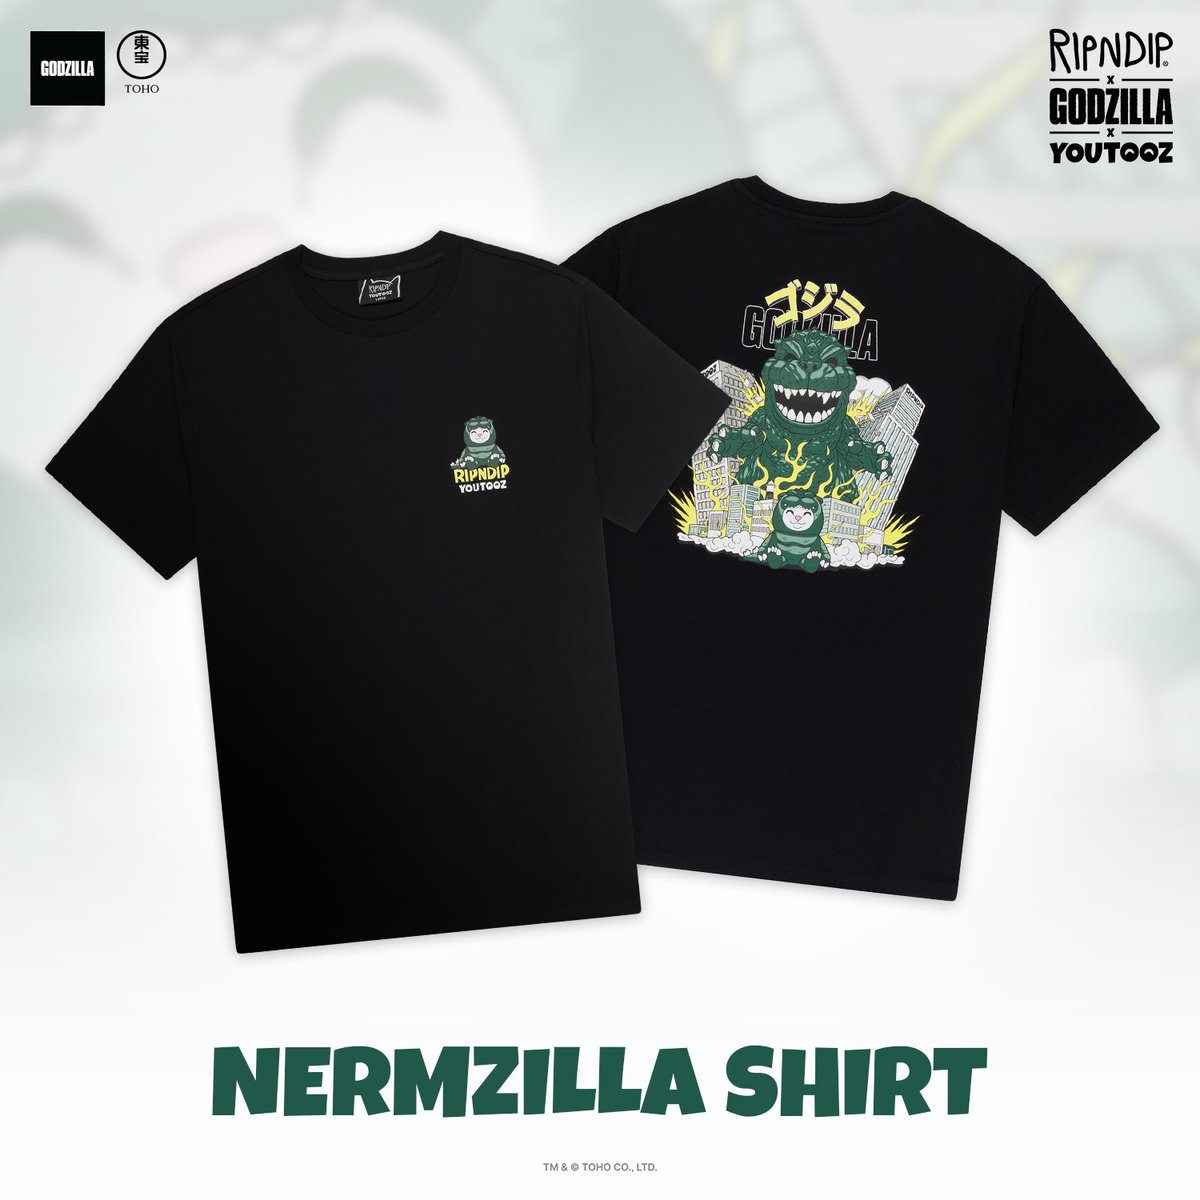 nermzilla has arrived 😼 youtooz x @Godzilla_Toho x @RIPNDIP collection drops april 16th at 9am pst